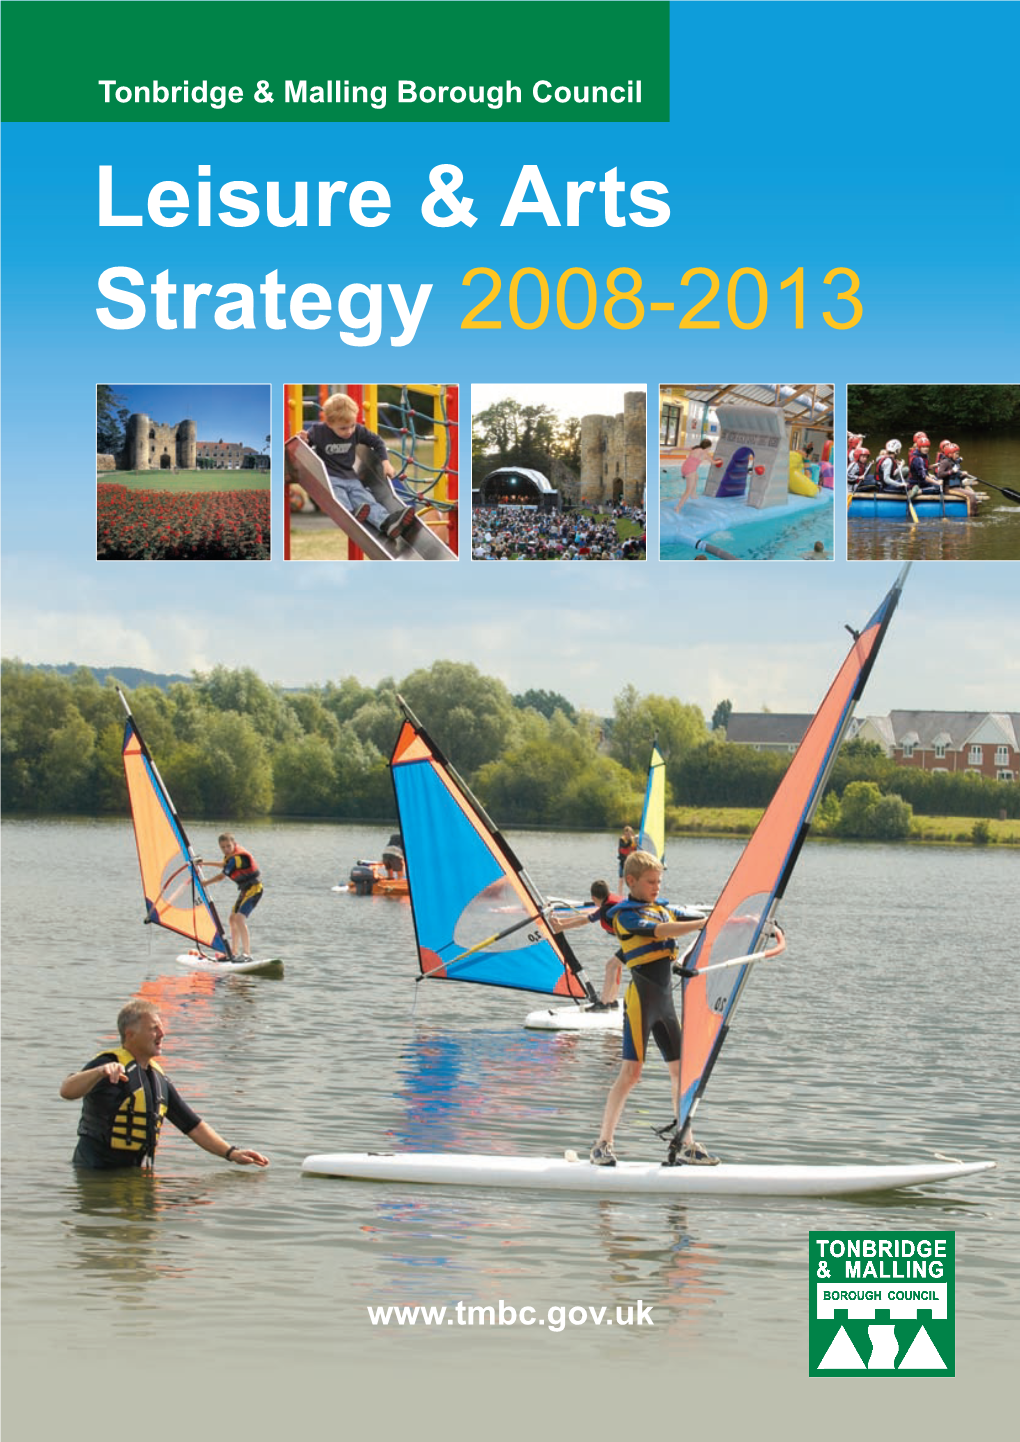 Leisure & Arts Strategy 2008-2013